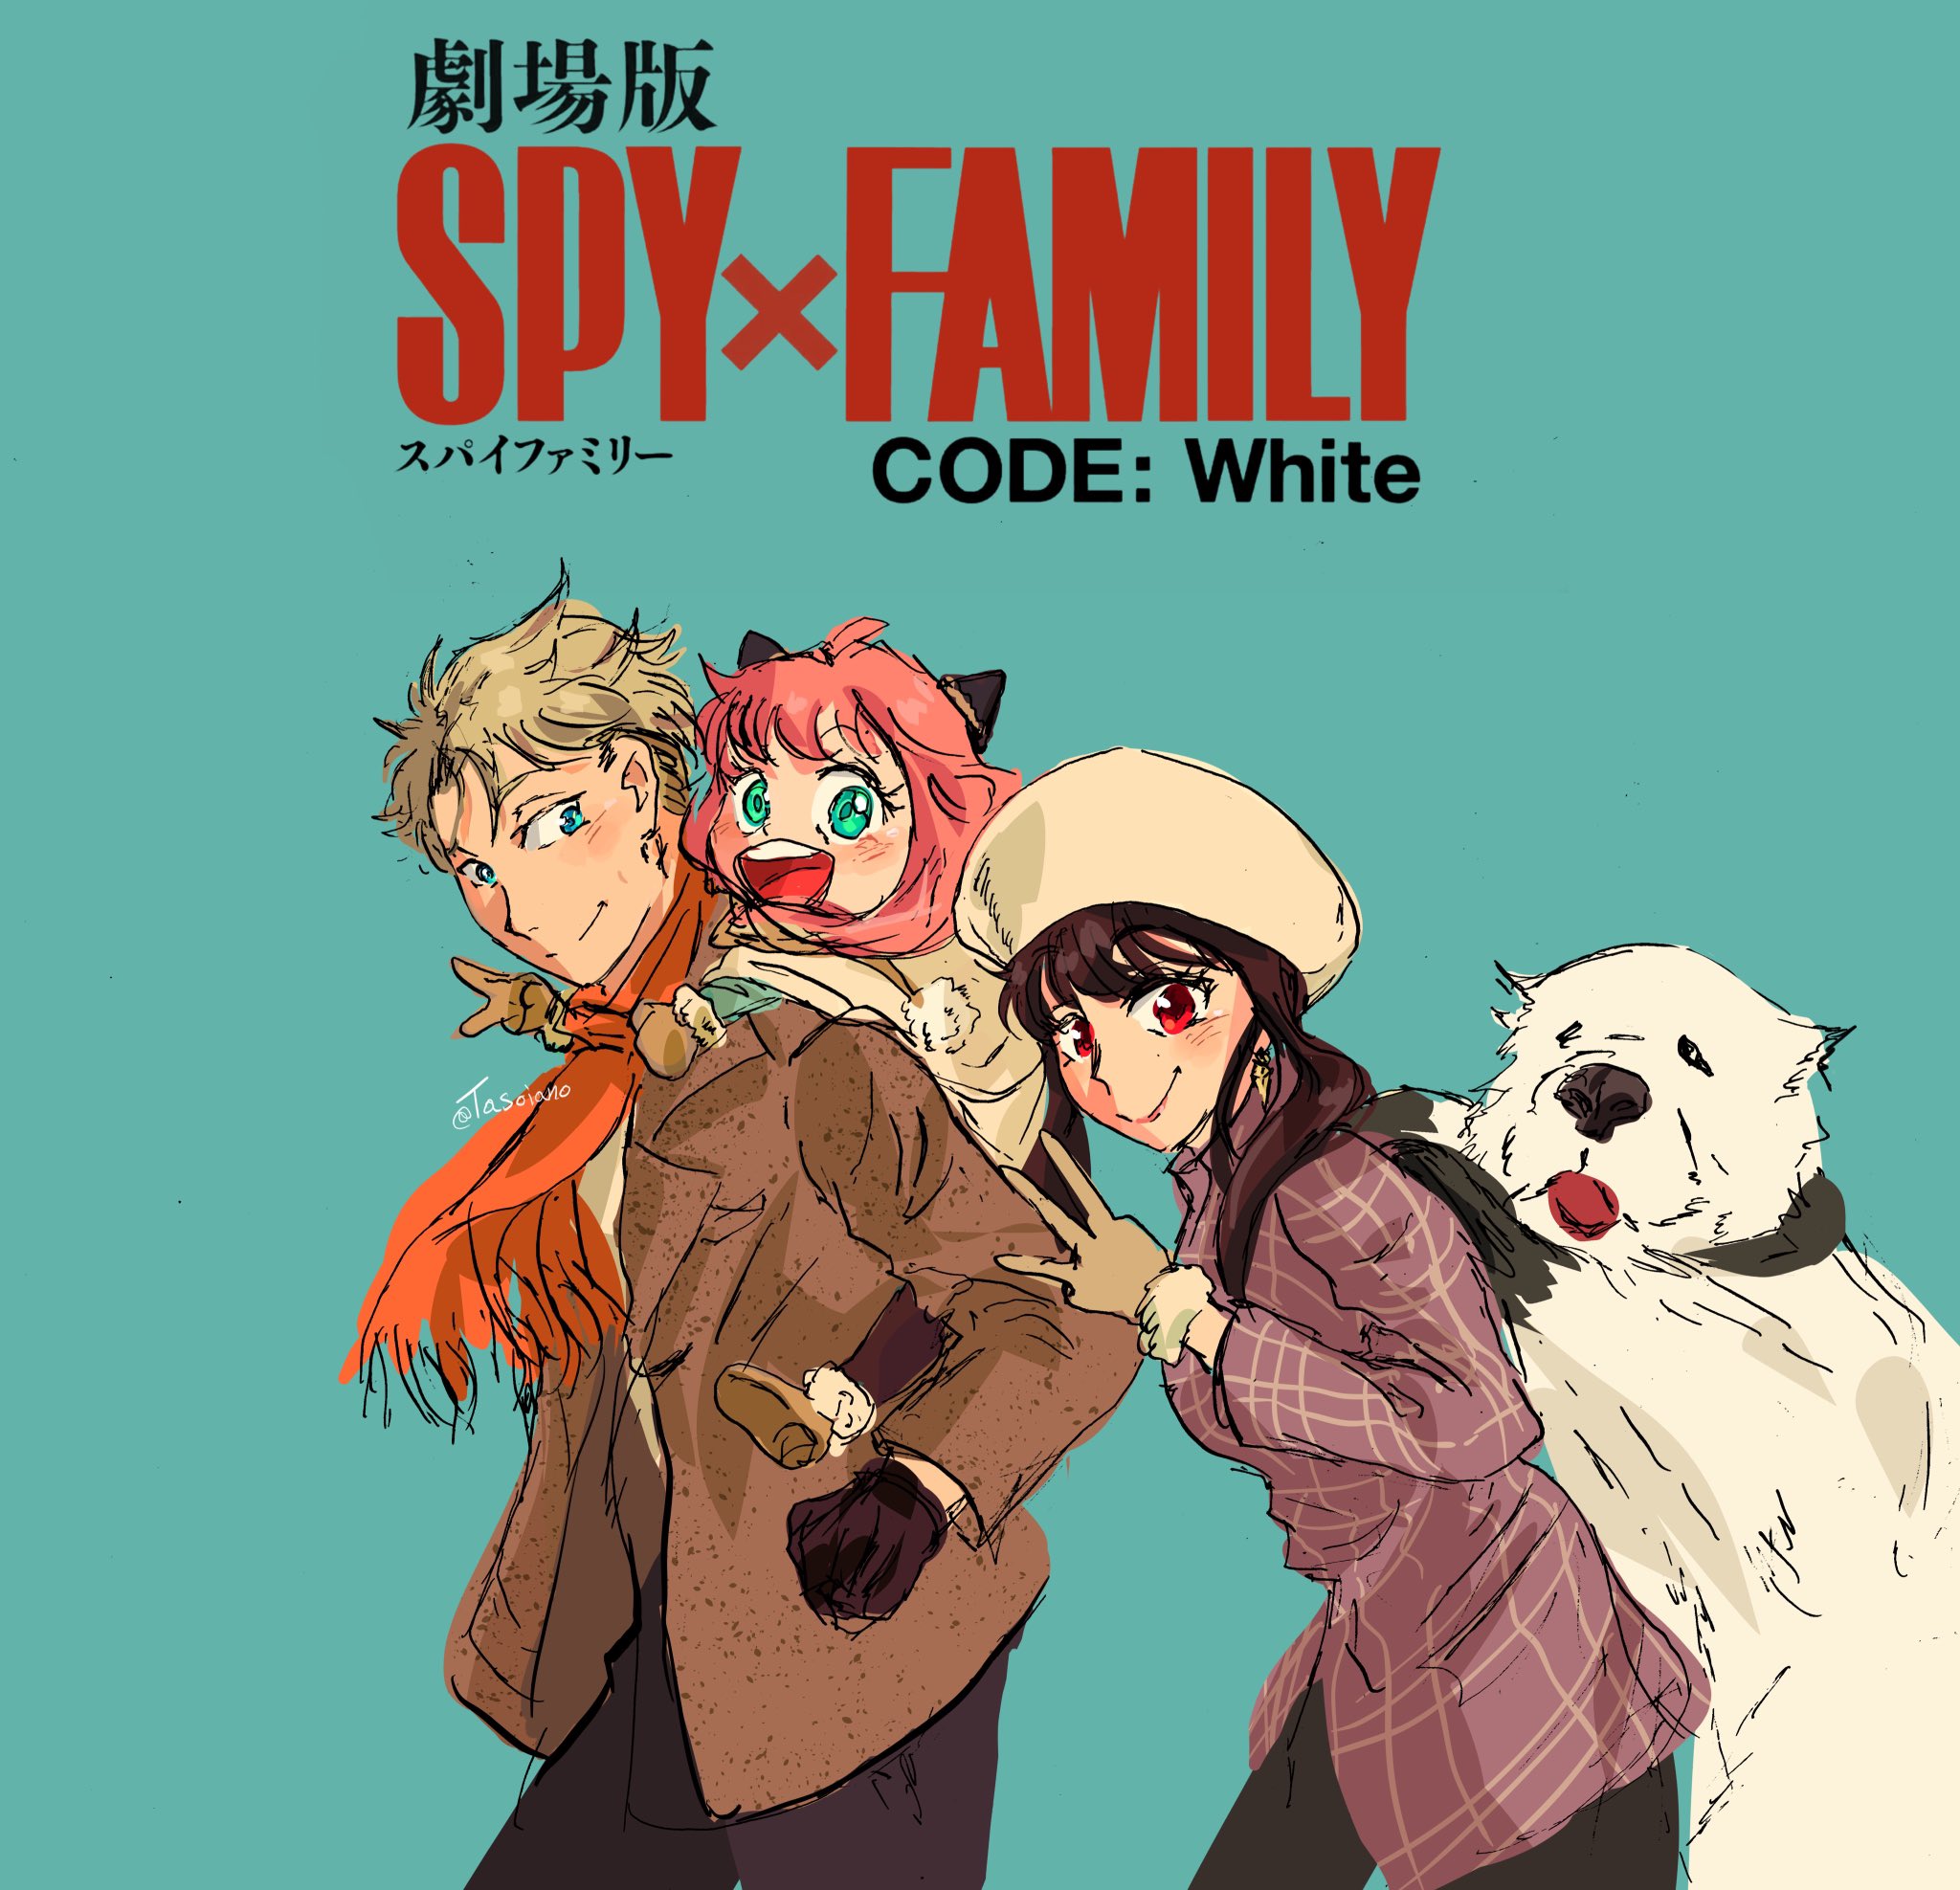 Spy x Family Movie: Code: White (Spy x Family Code: White) 